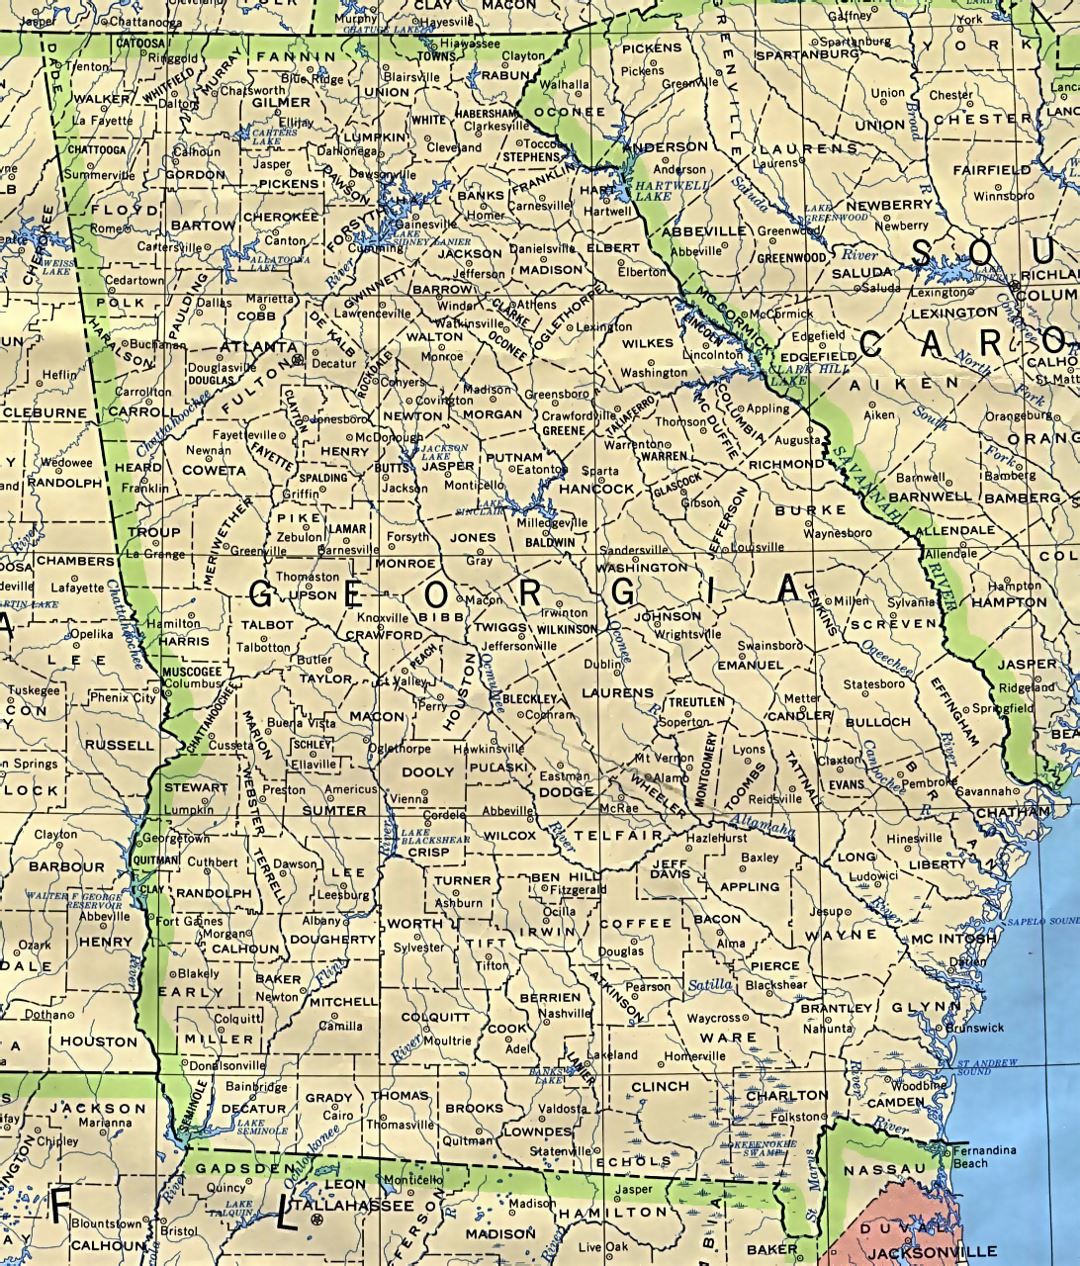 Administrative map of Georgia state